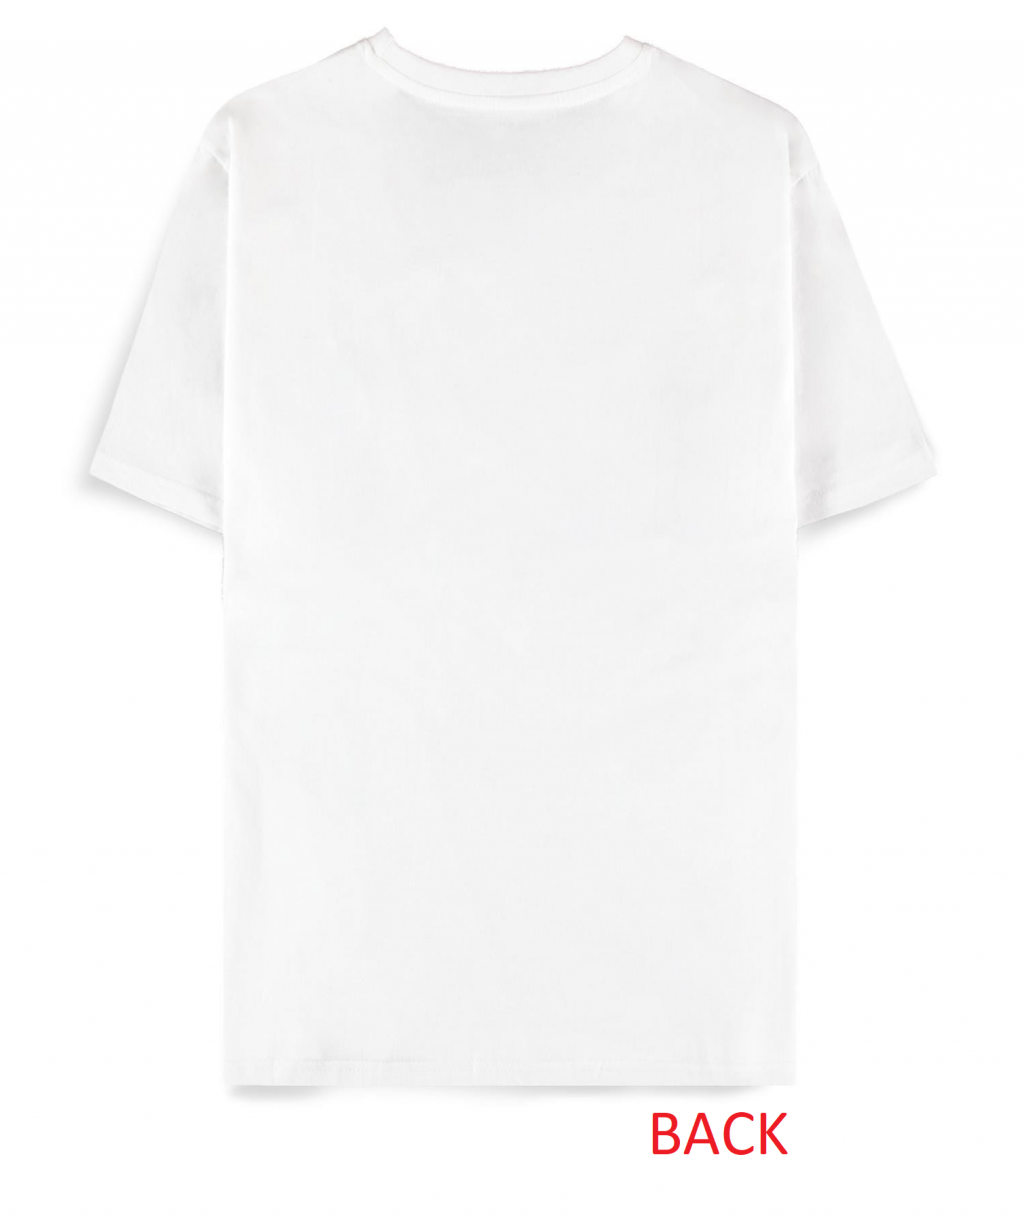 DEATH NOTE - Ryuk Square - Men's White T-Shirt (XXL)